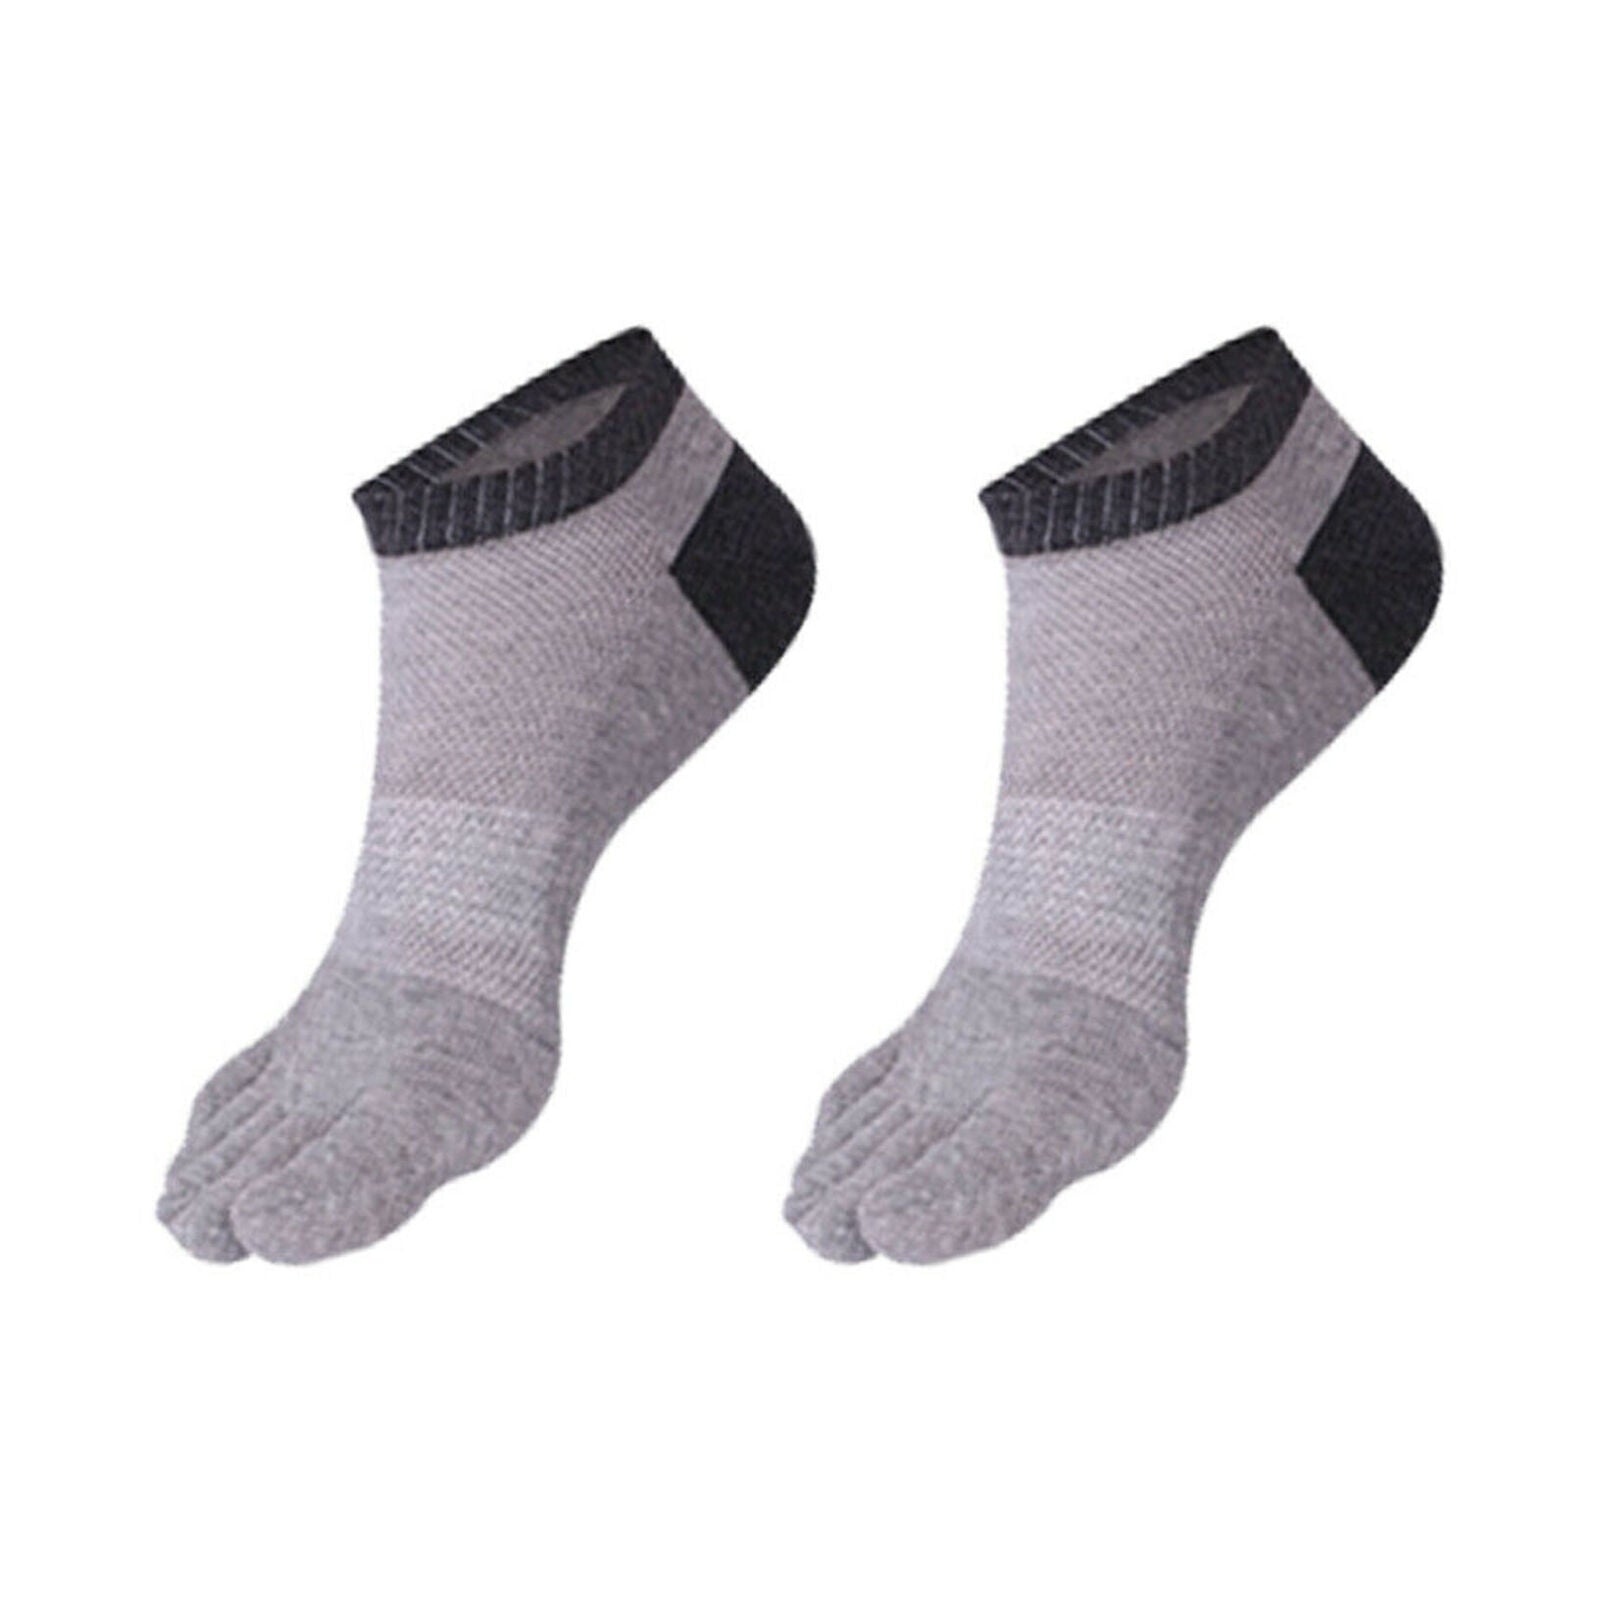 5 pairs of toe socks socks sports yoga sneakers pilates socks men